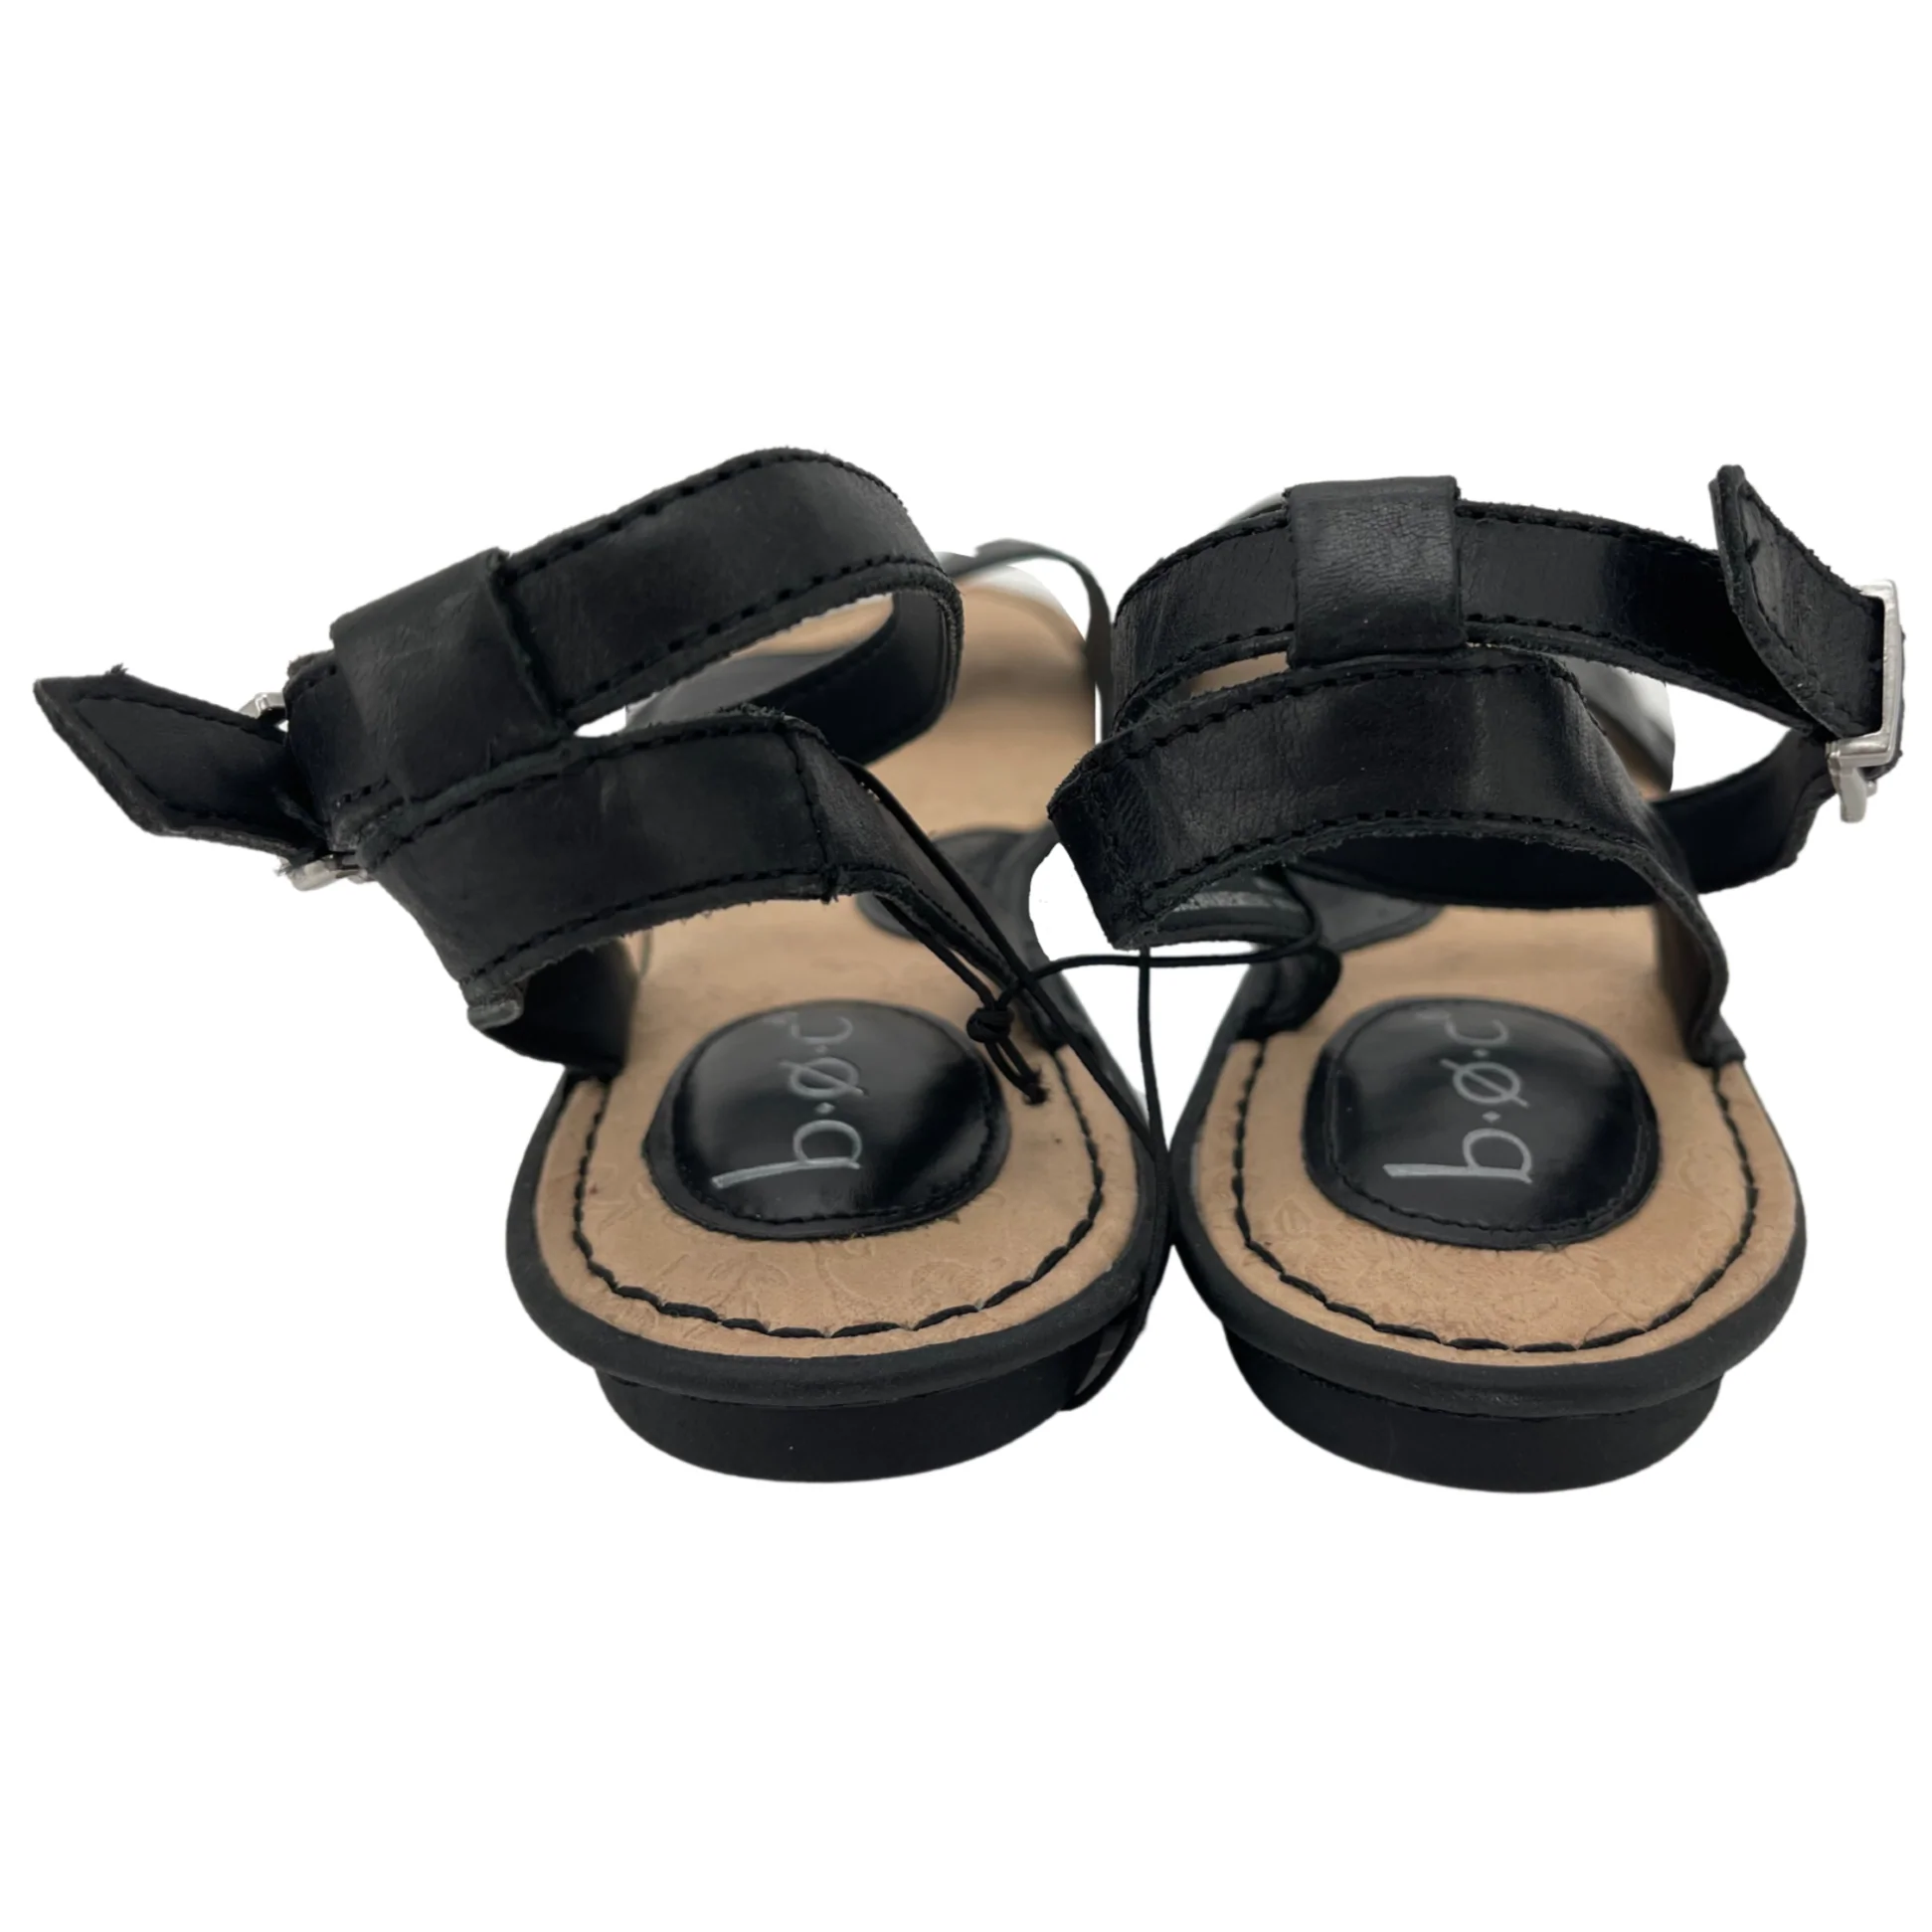 BOC Women's Sandals / Strappy Summer Shoes / Black / Size 7